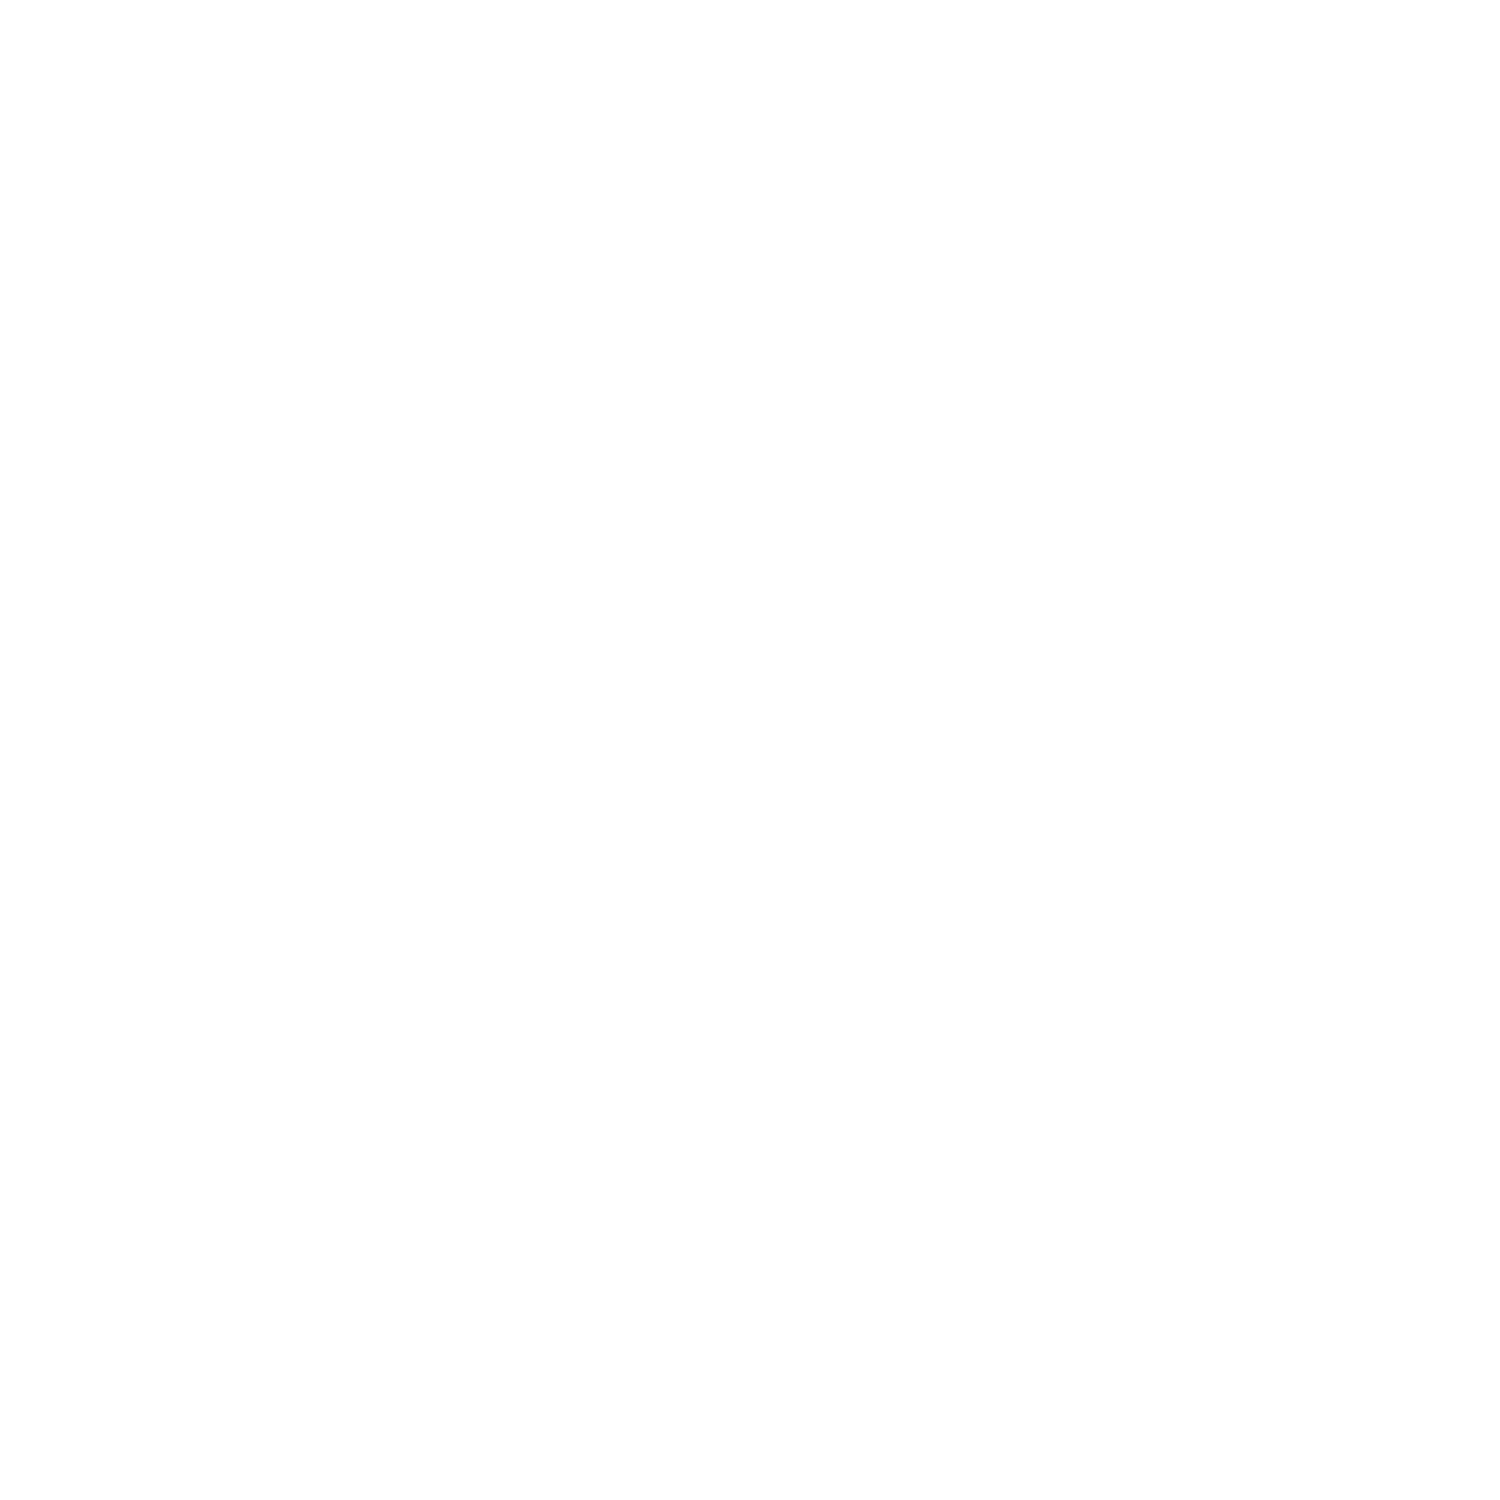  Leadership USA